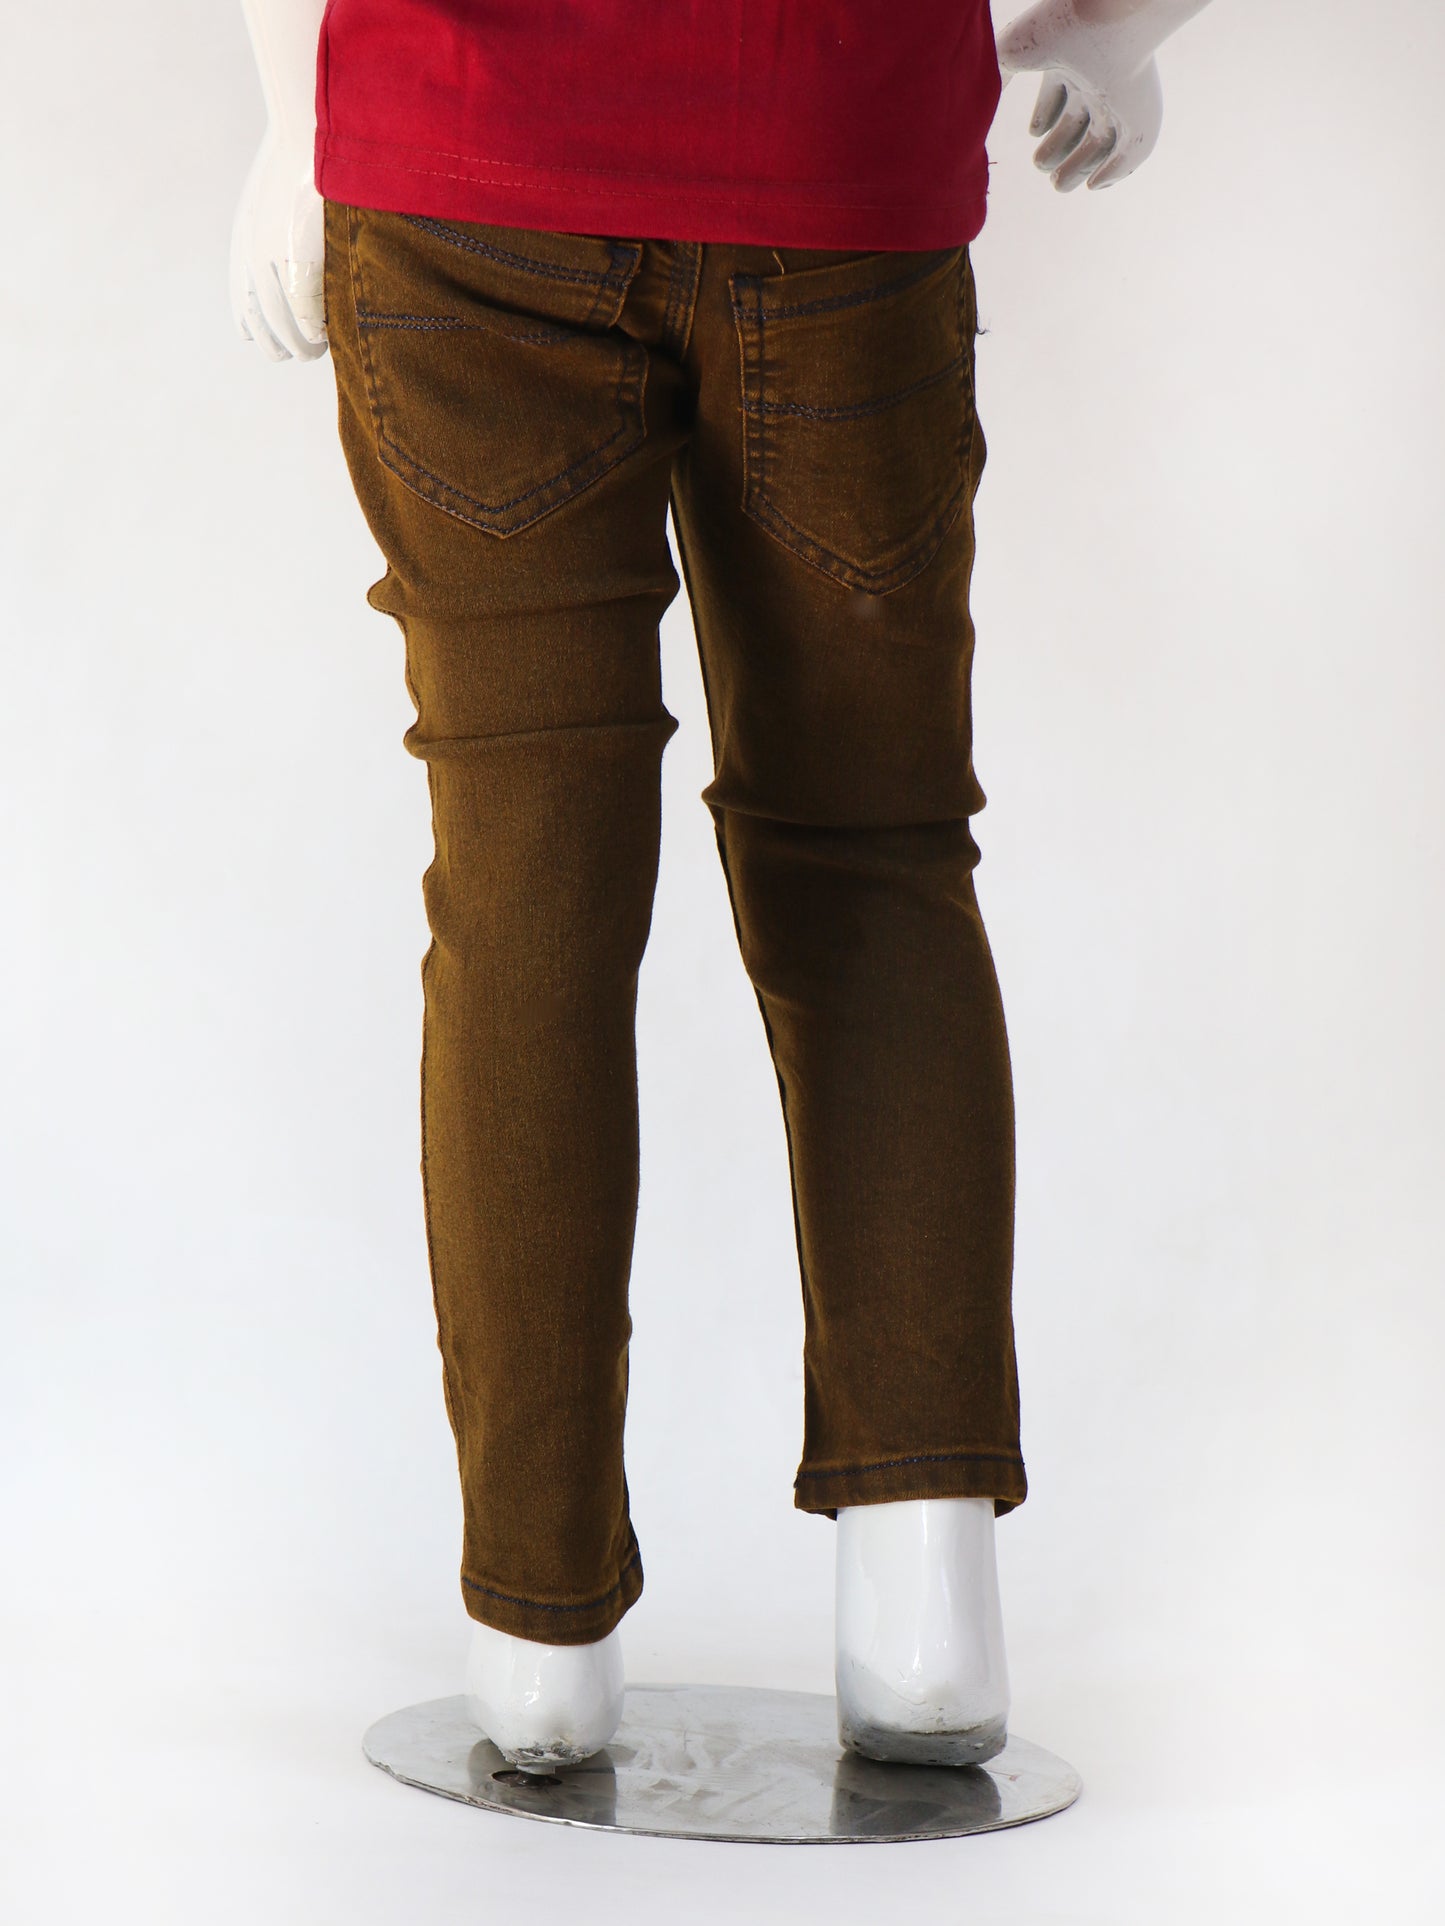 Boys Stretchable Denim Jeans 5Yrs - 13Yrs Brown